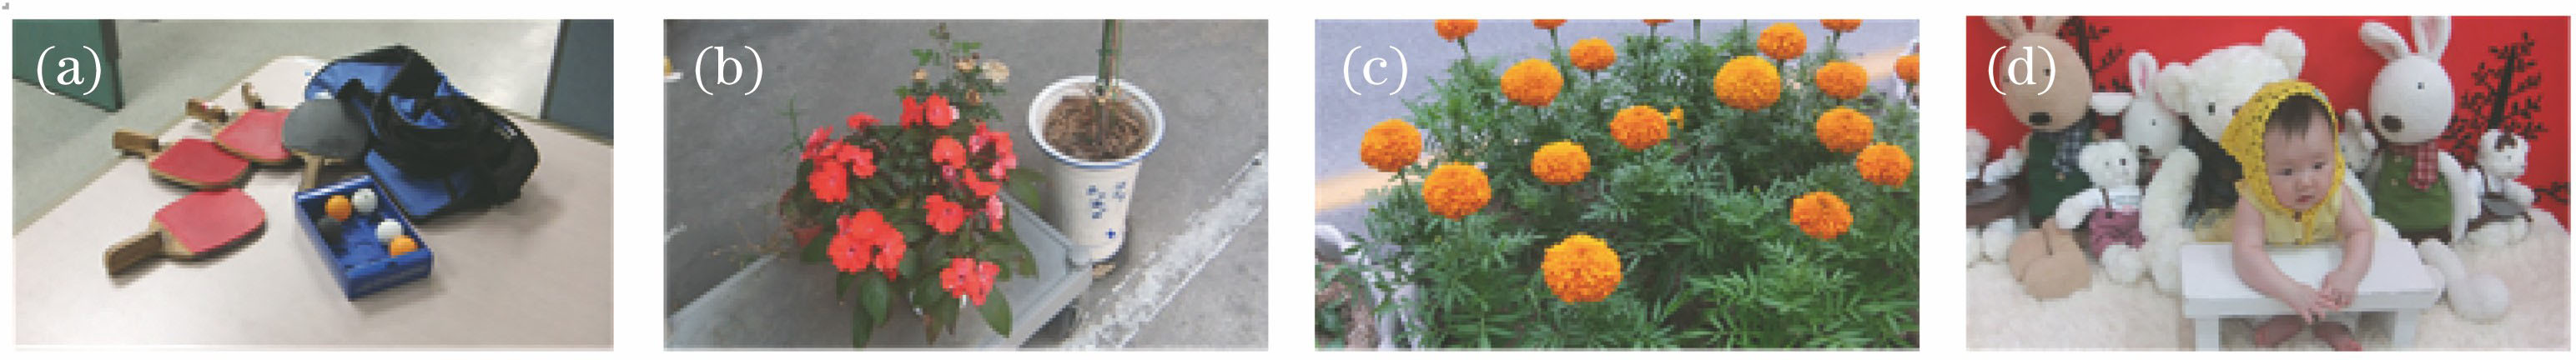 Four original stereoscopic images.(a) Ball; (b) plant; (c) flower; (d) baby